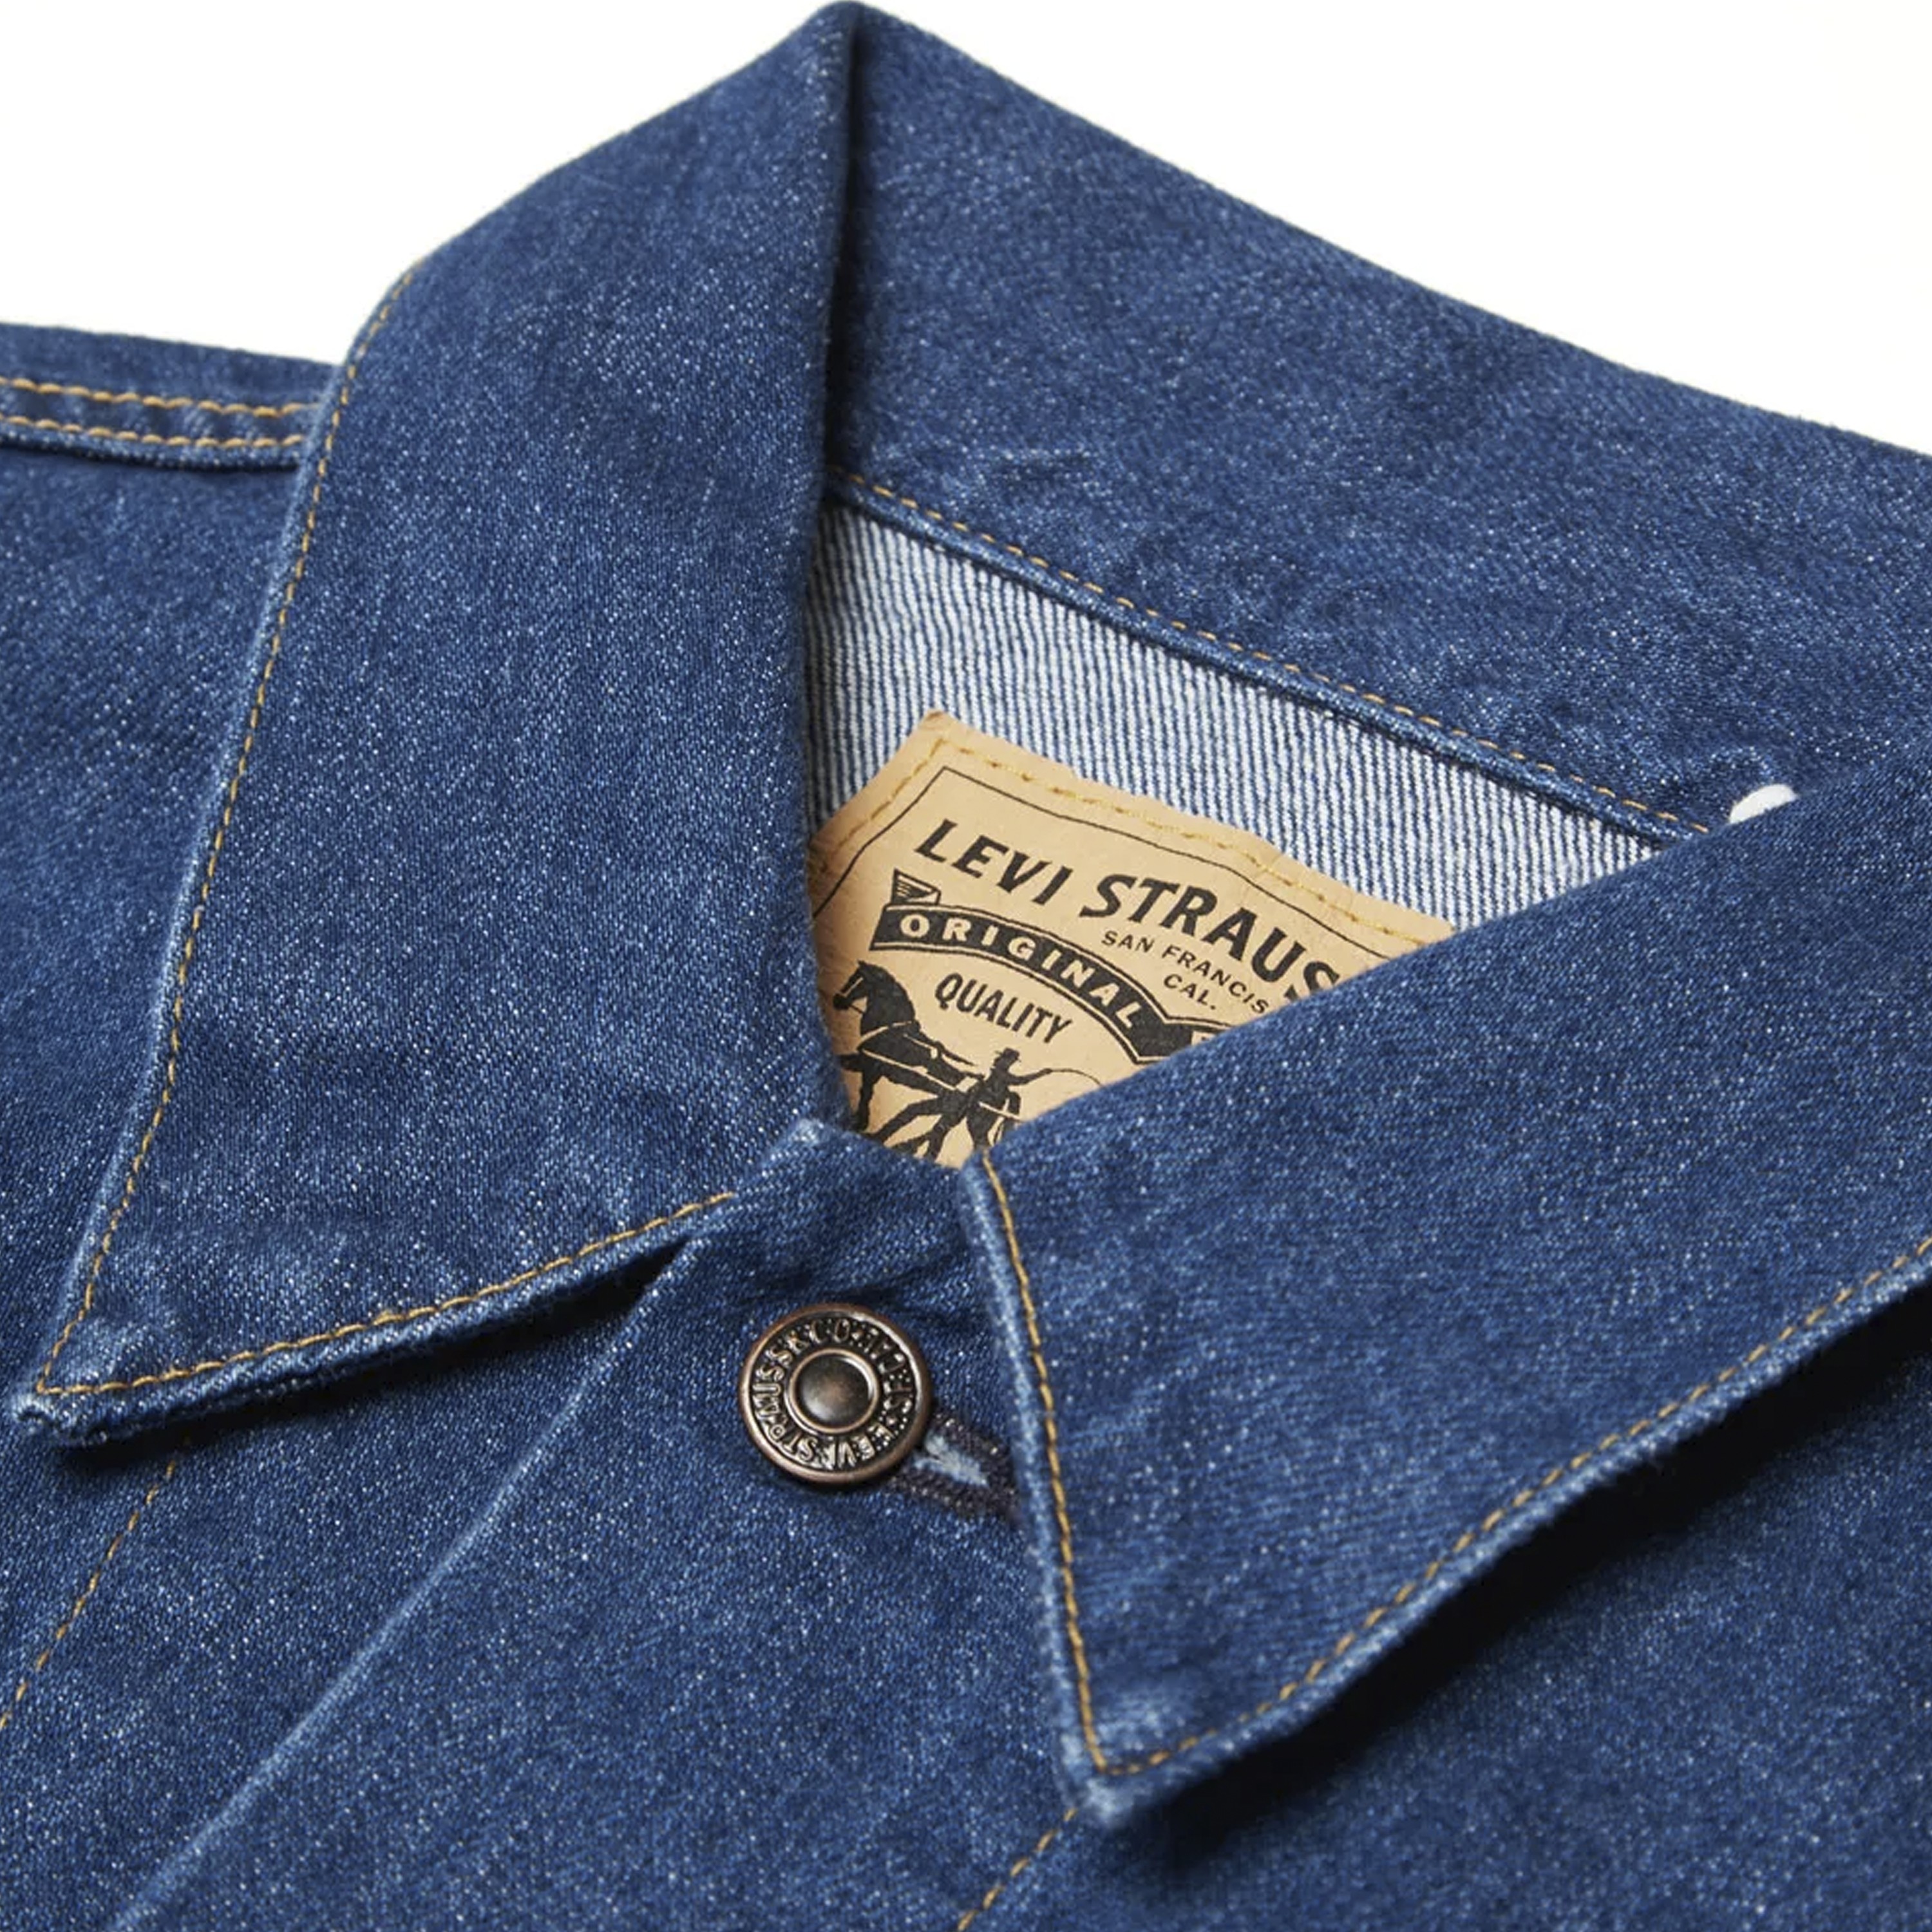 Levi's Vintage Clothing 1970's Trucker Jacket (Denim) - 72351-0001